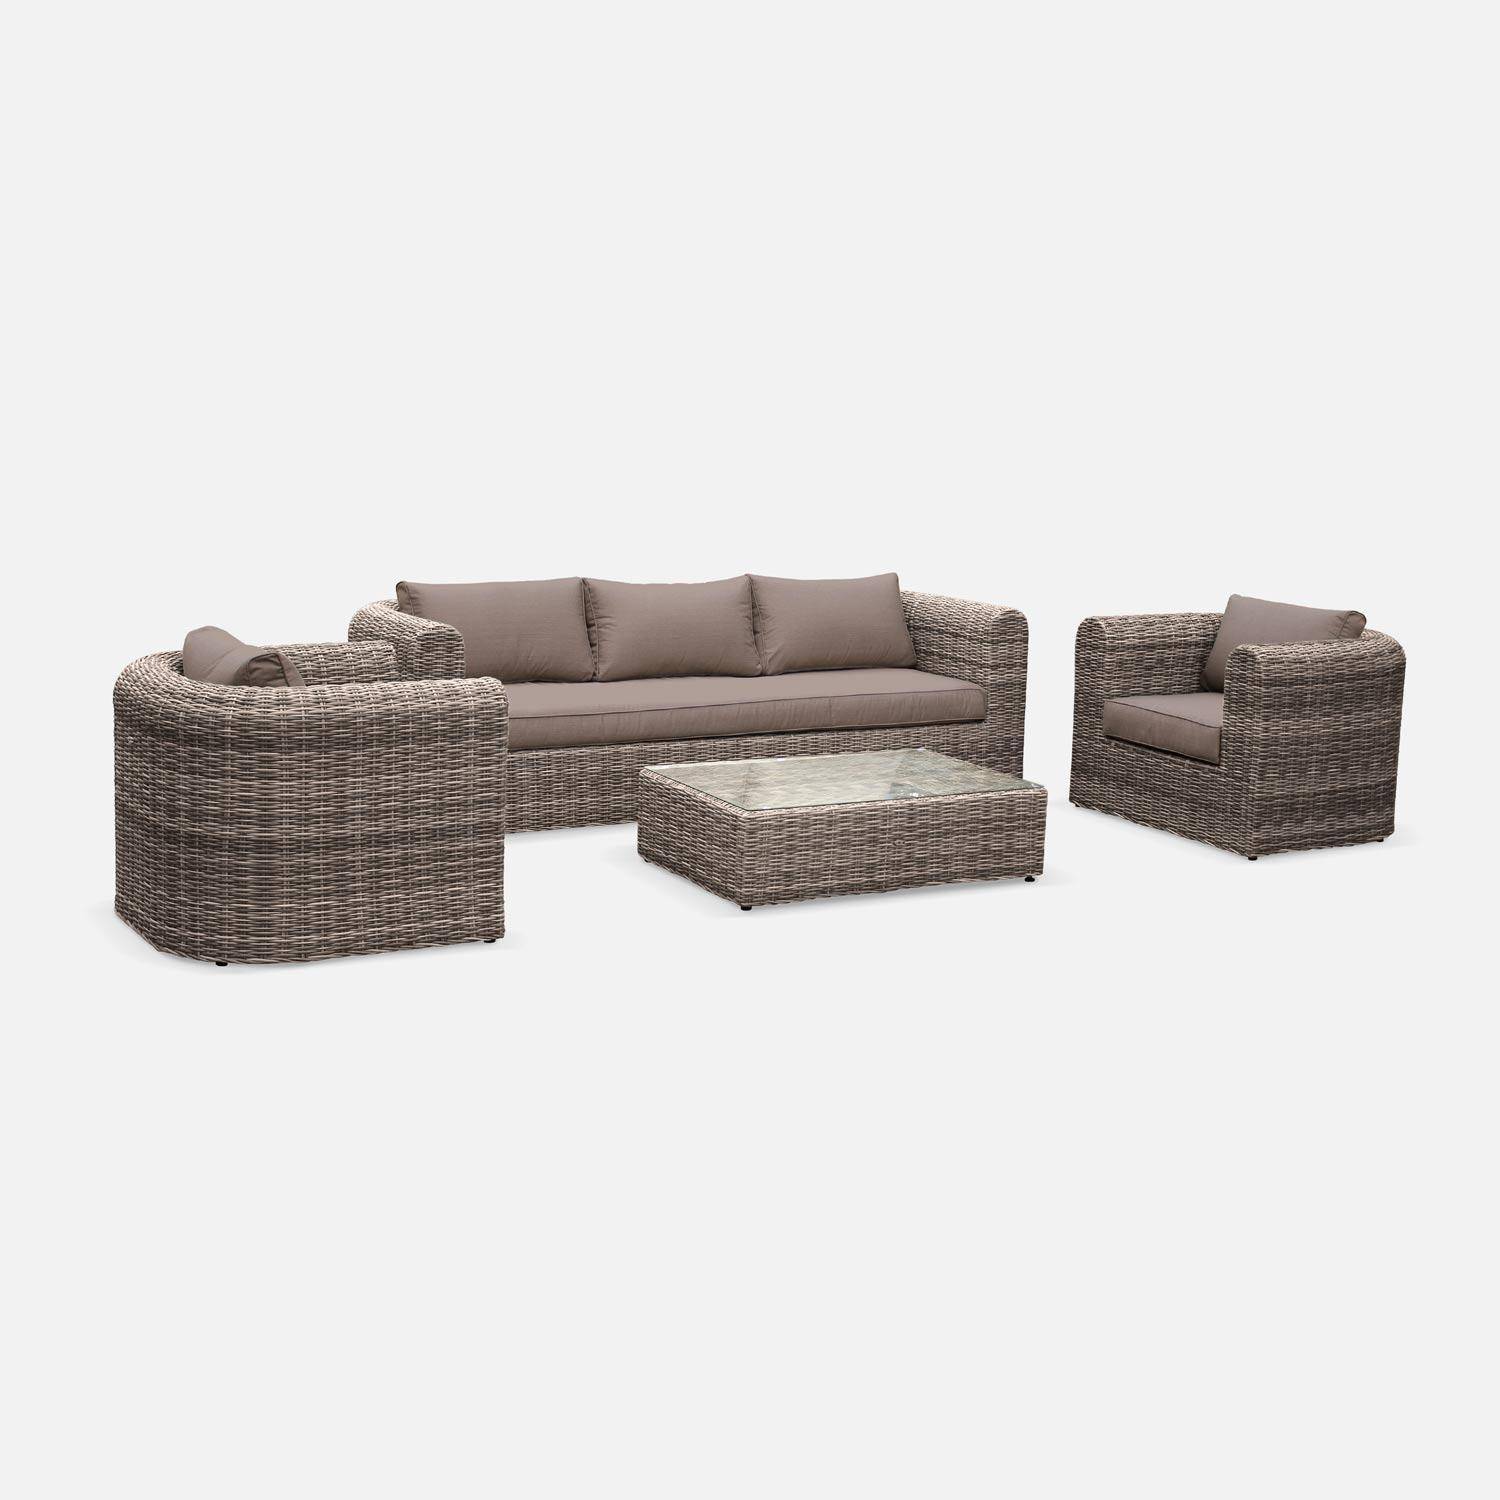 5-seater round rattan garden sofa set - 3-seater sofa, 2 armchairs, 1 coffee table - Juliano - Beige Photo2